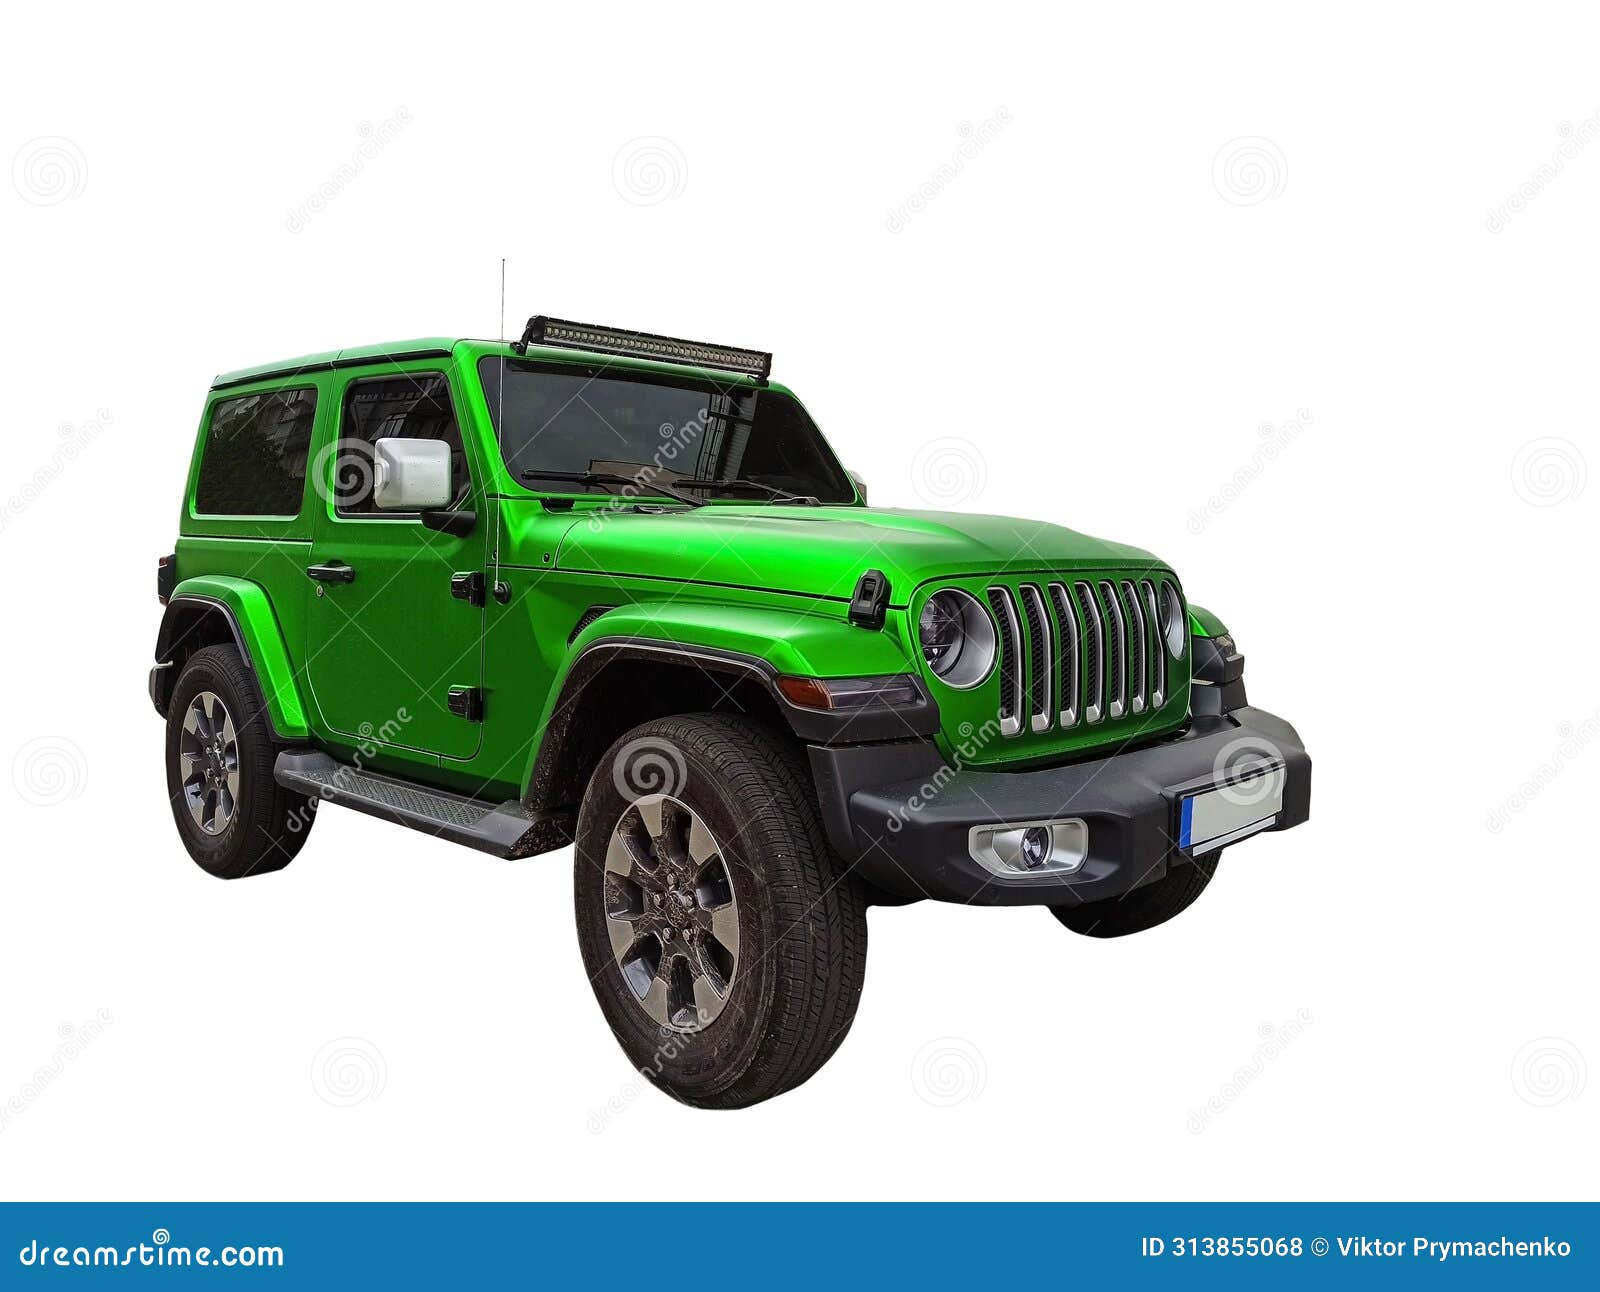 green car jeep wrangler rubicon isoltad on white